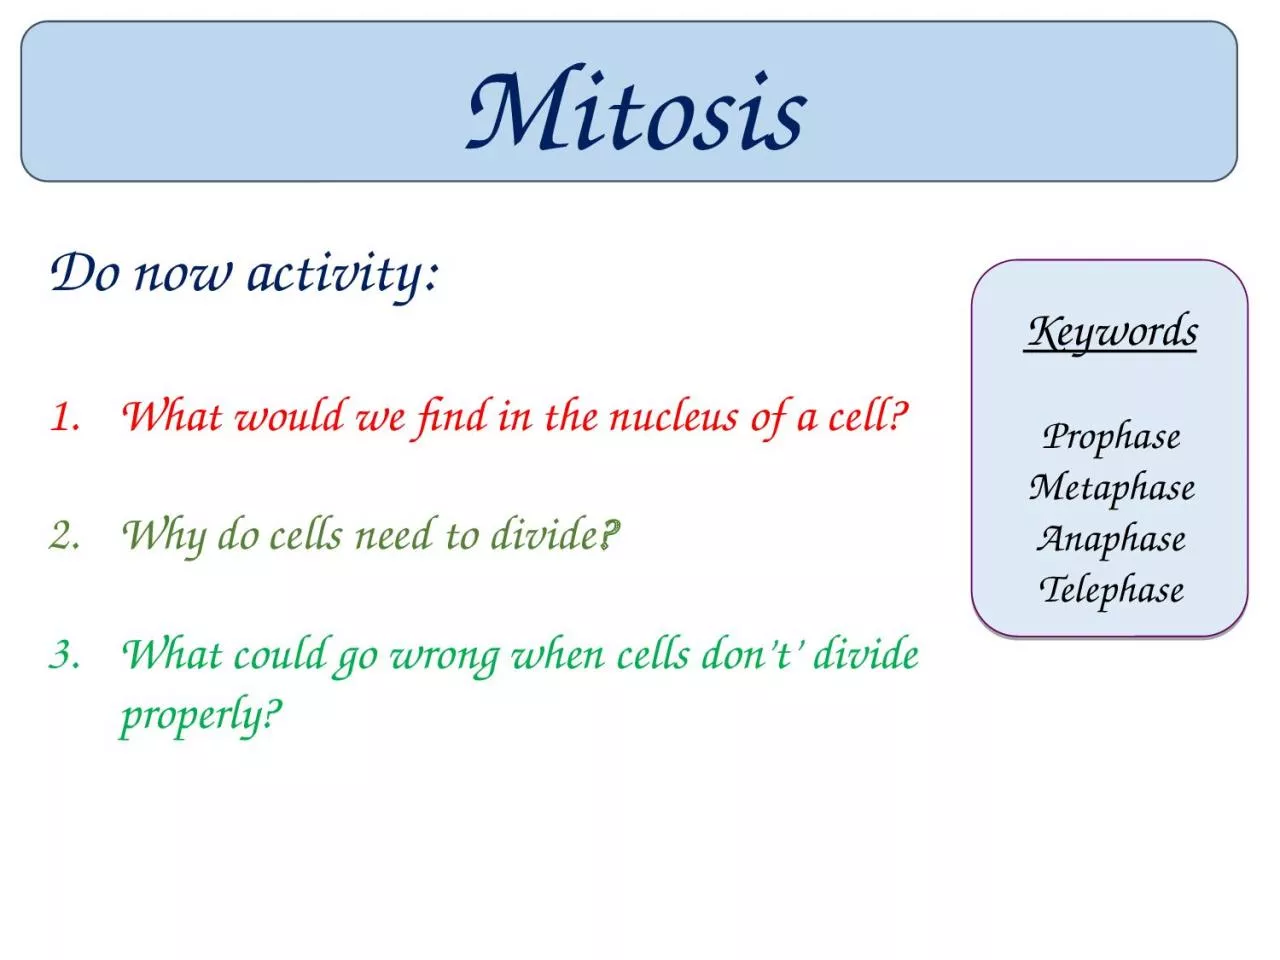 Mitosis Keywords Prophase